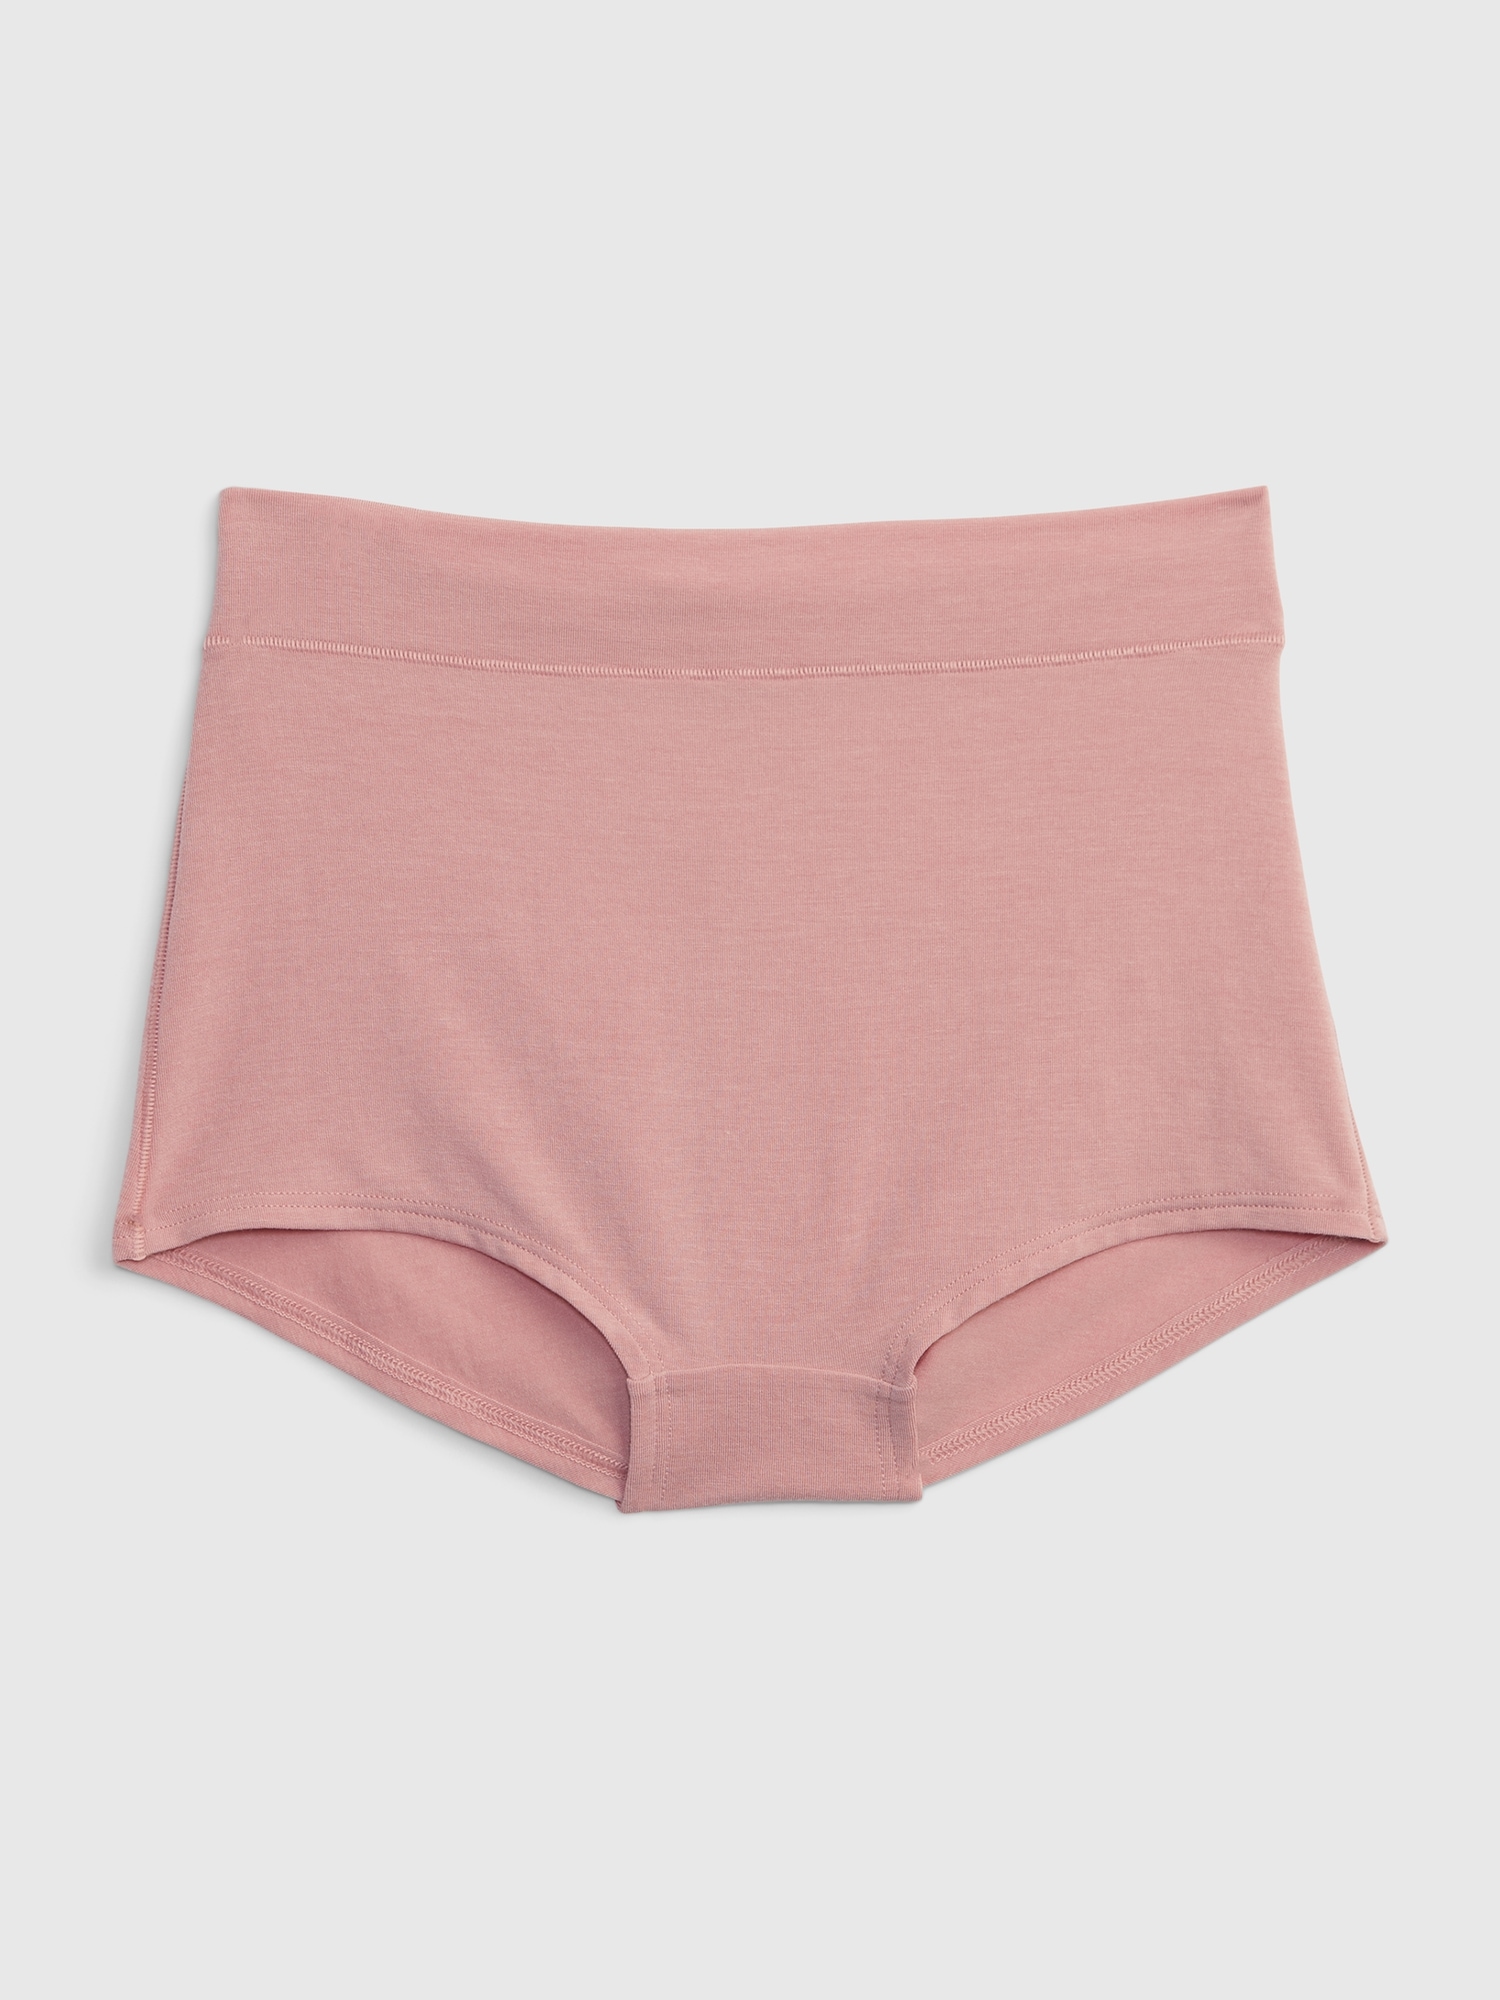 Gap Bikini Panties for Women